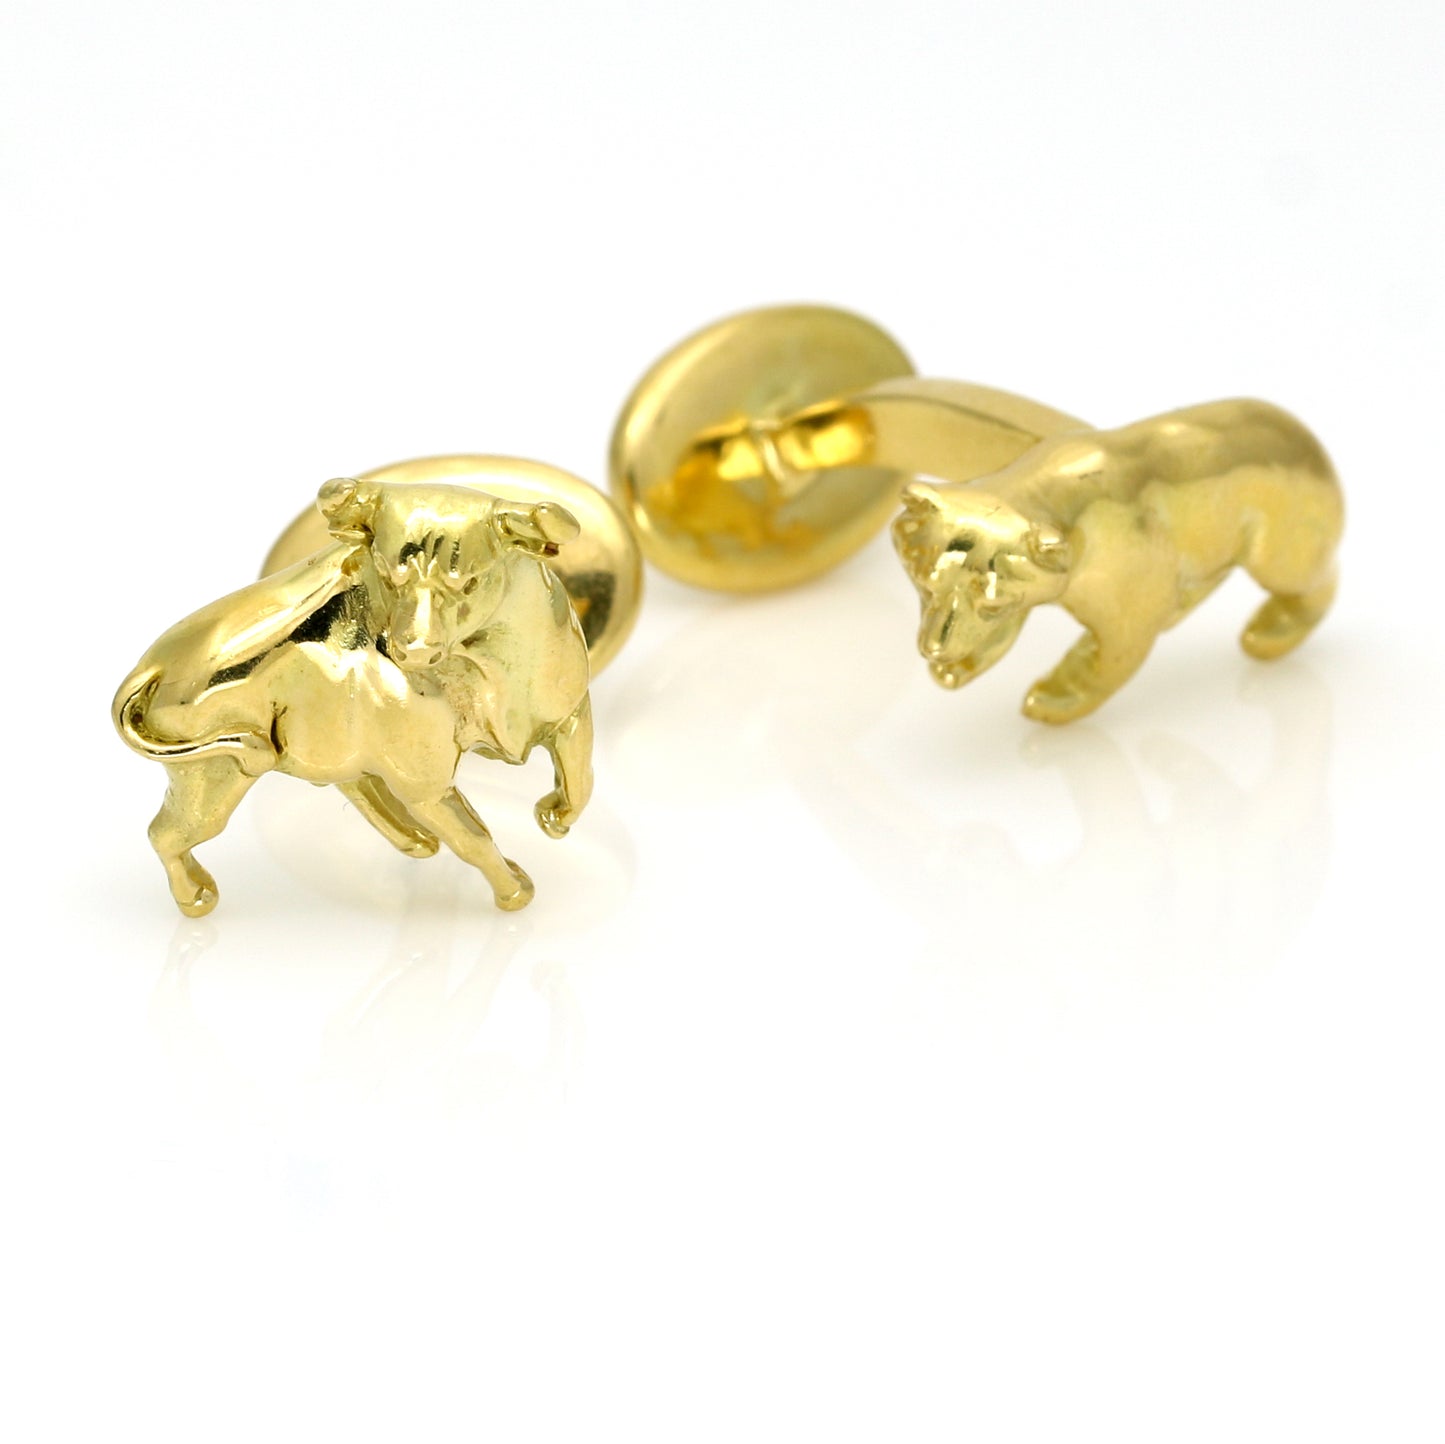 Rare Tiffany & Co. Bull Bear 18k Gold Cufflinks Wall Street Symbols 1999